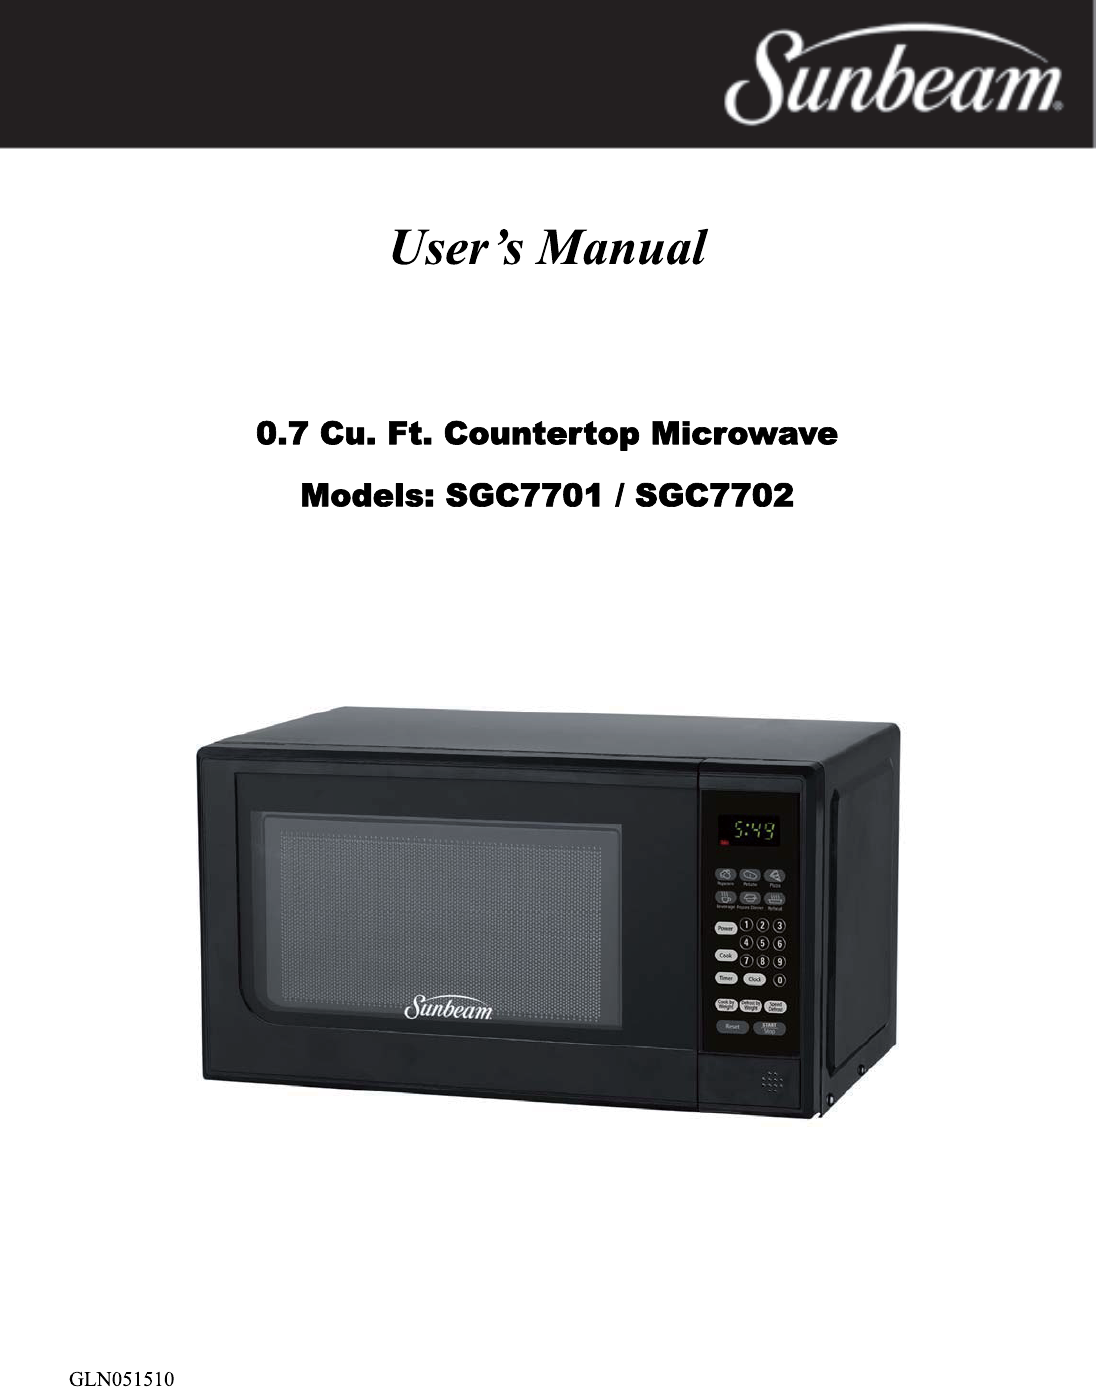 Solwave Ameri-Series Heavy-Duty Commercial Steamer Microwave Oven -  208/240V, 2,200W